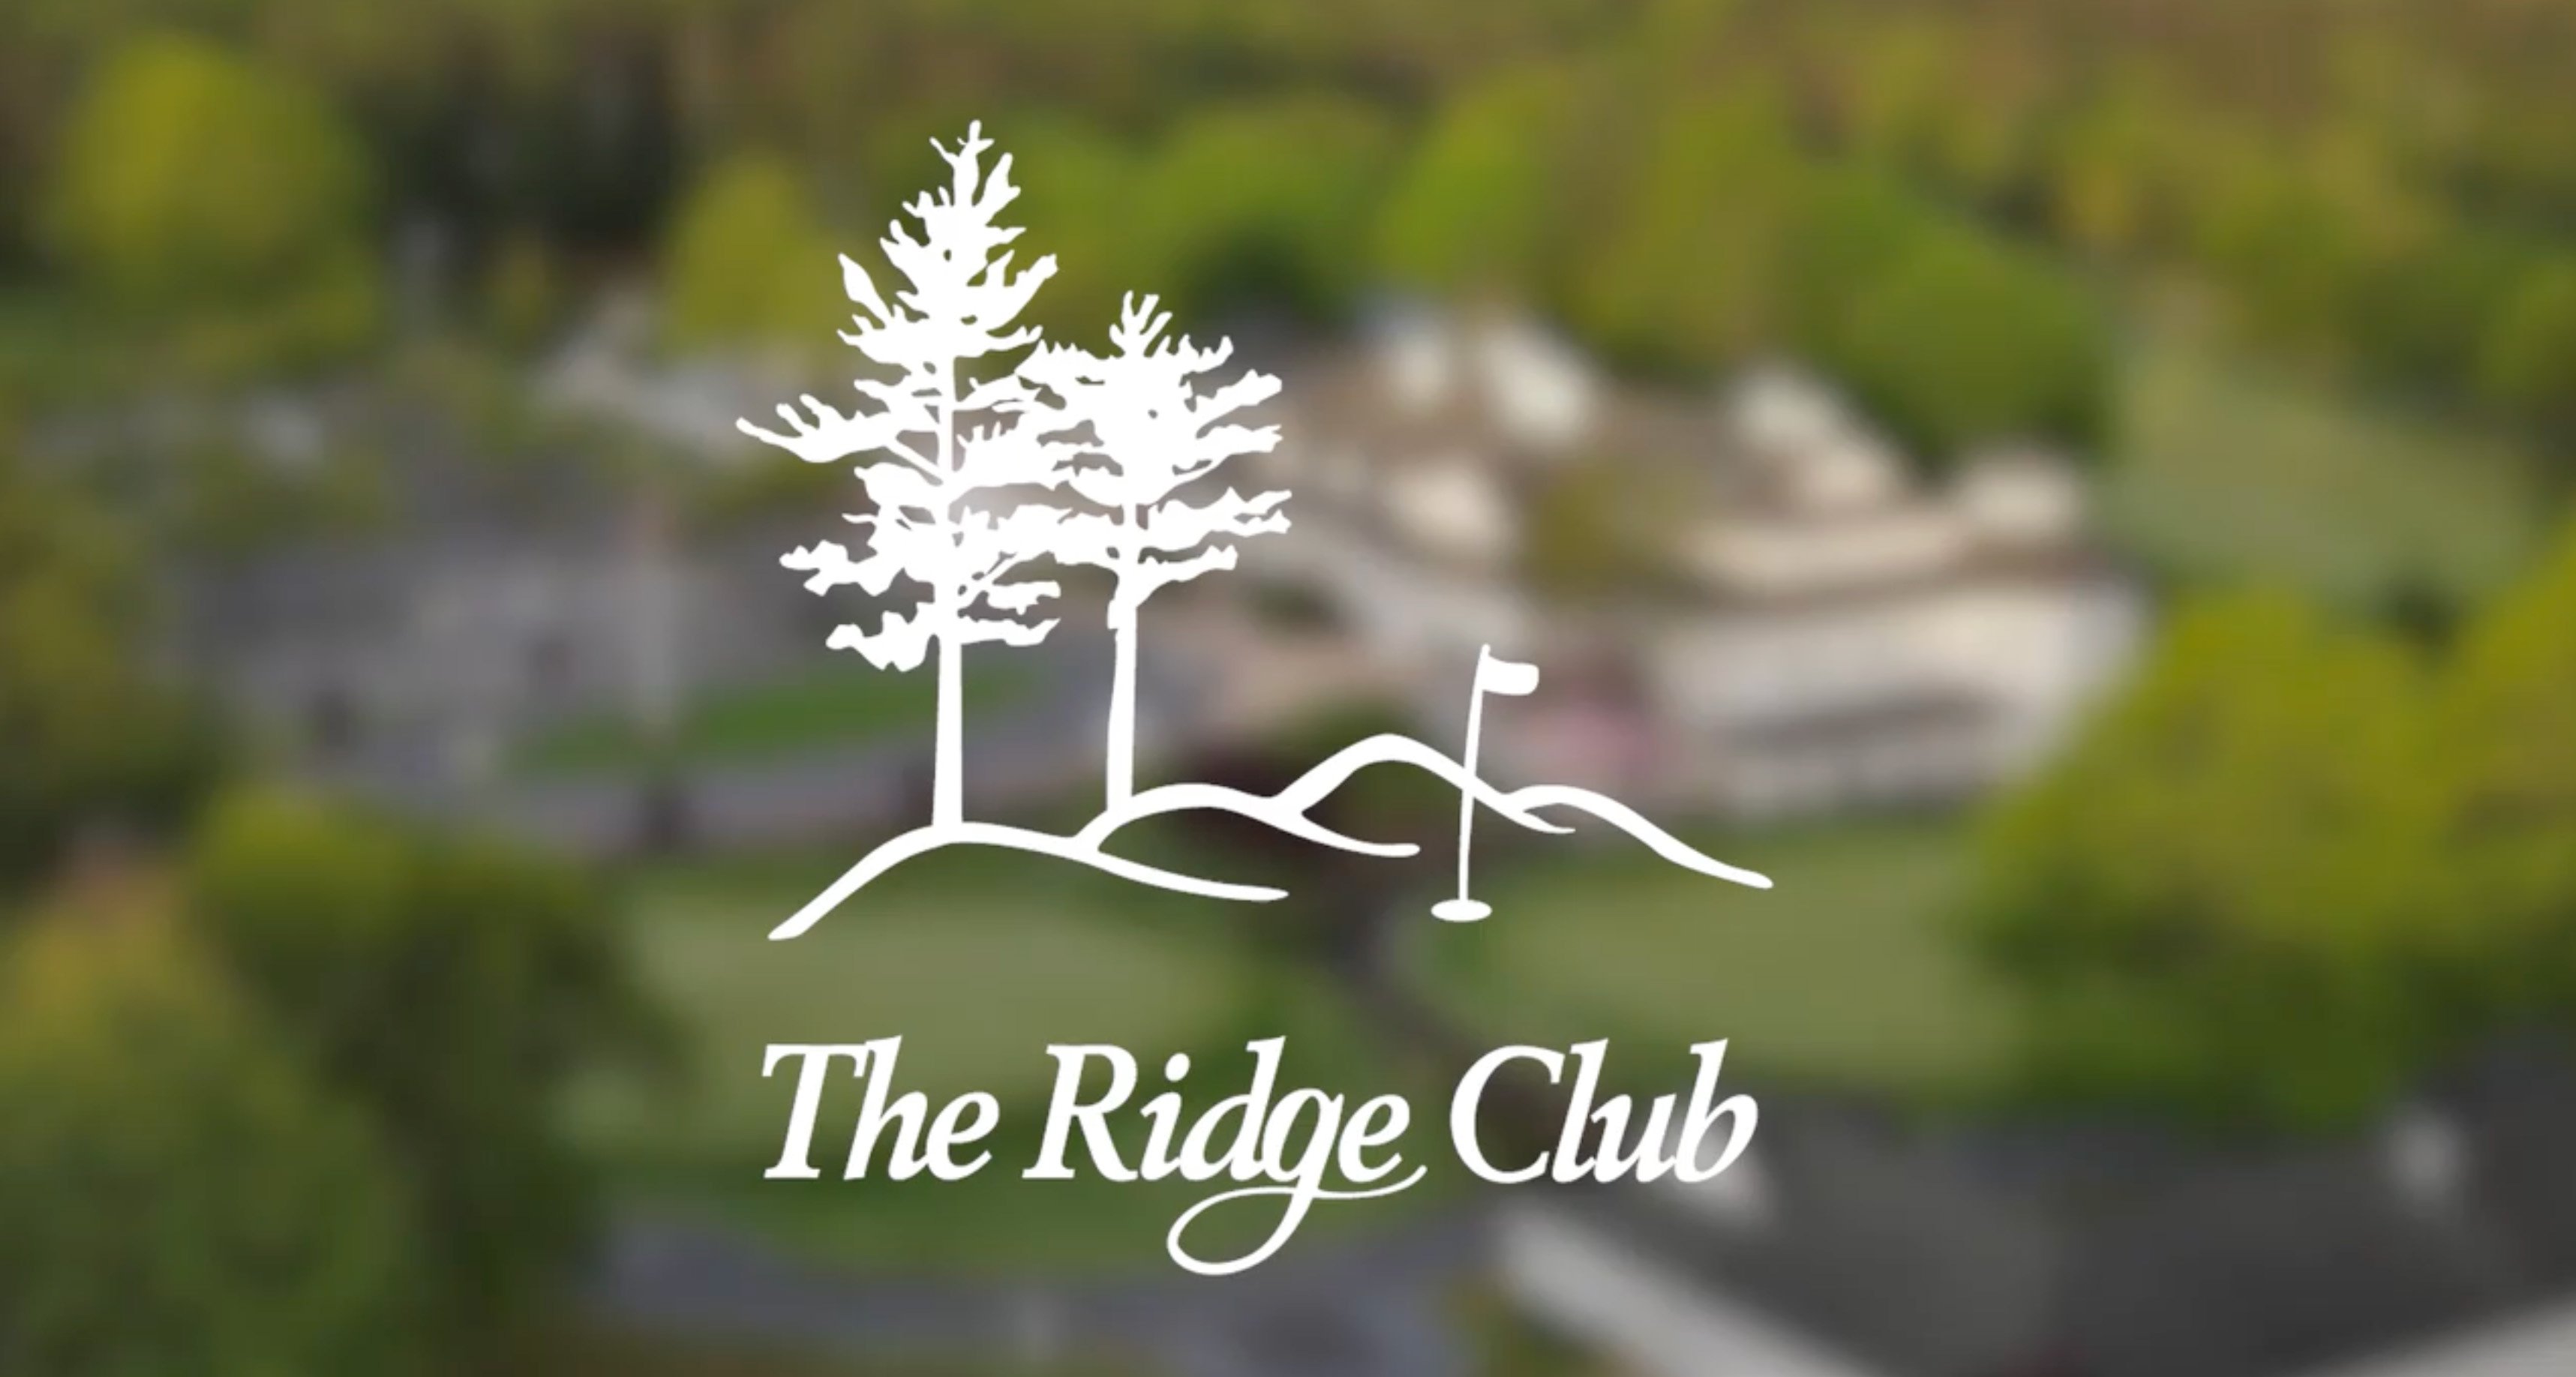 The Ridge Club, Sandwich, MA